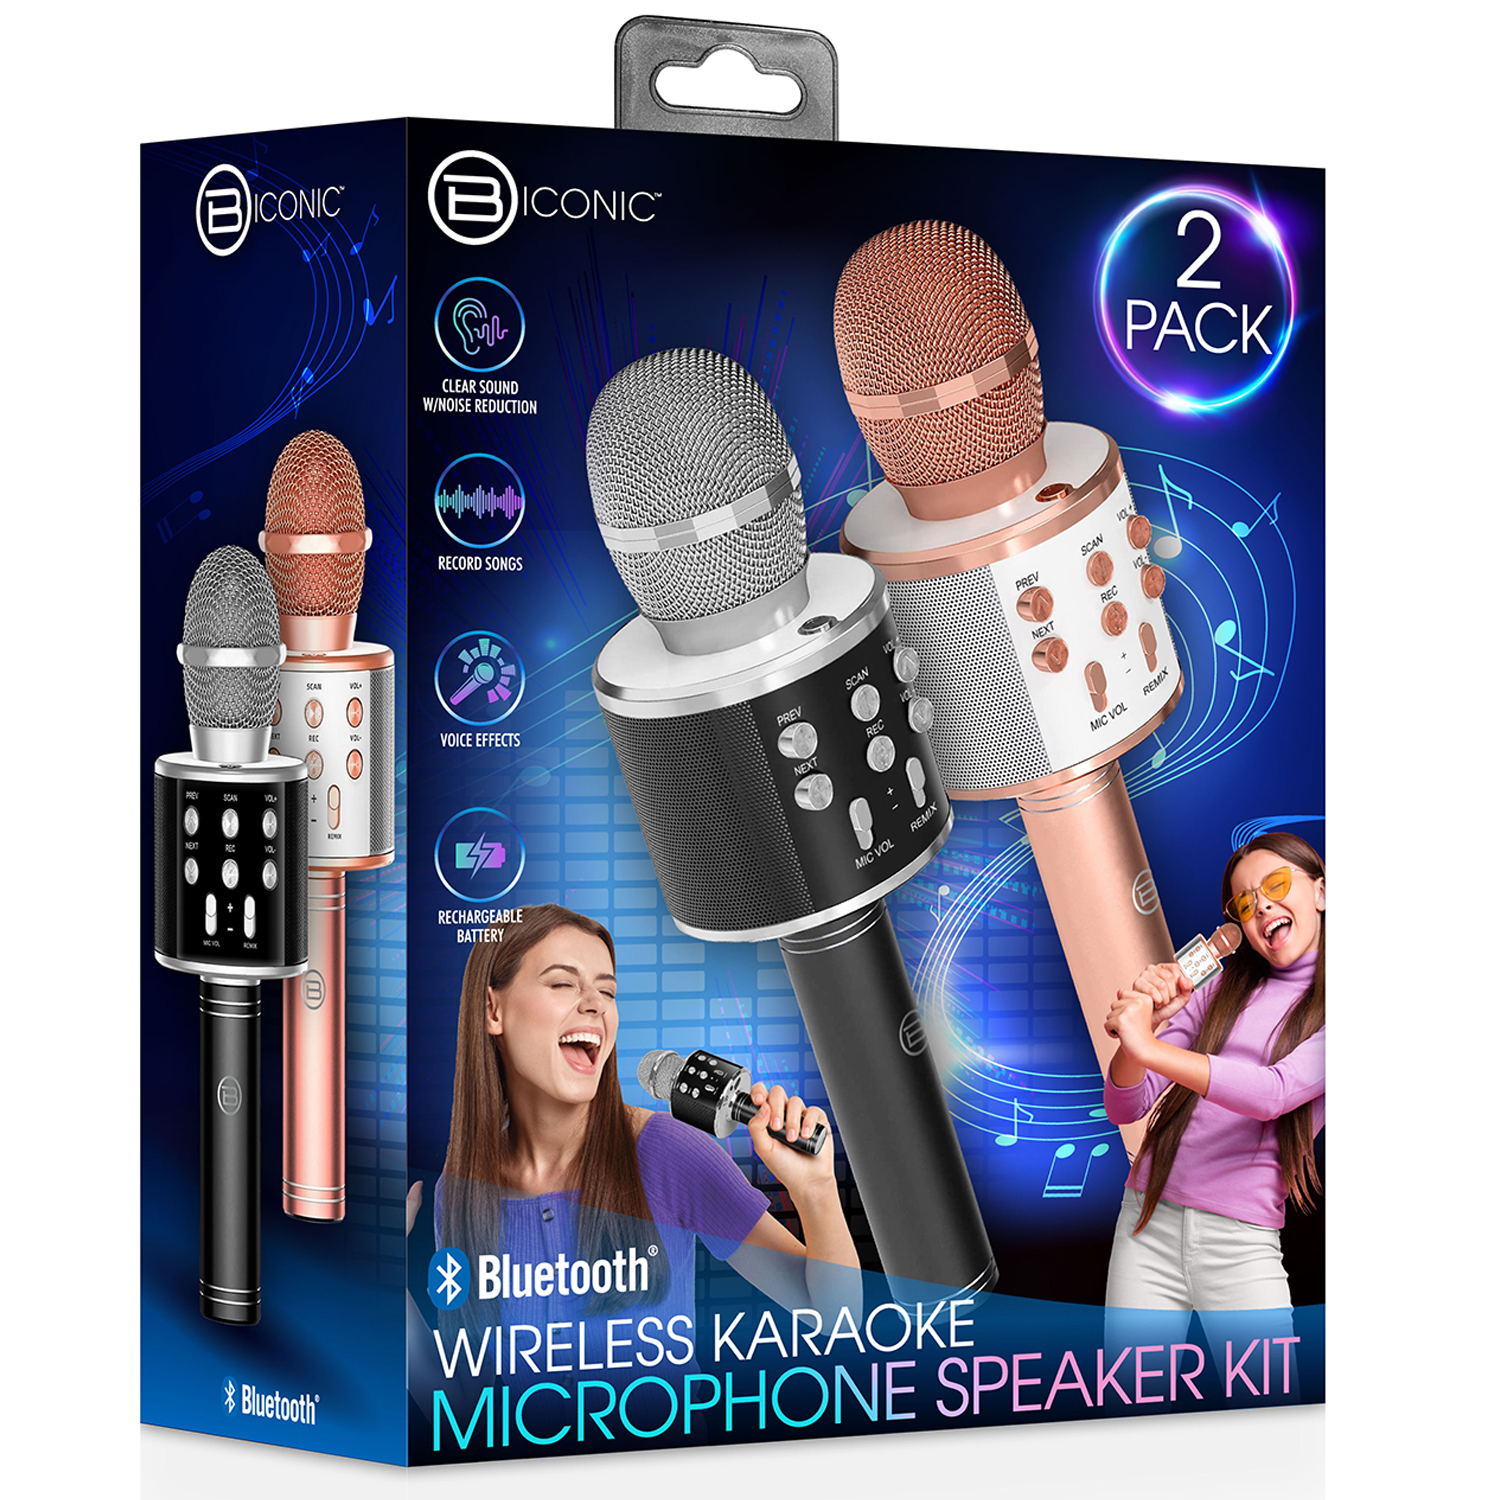 Haut parleur microphone karaoke Bluetooth - Or